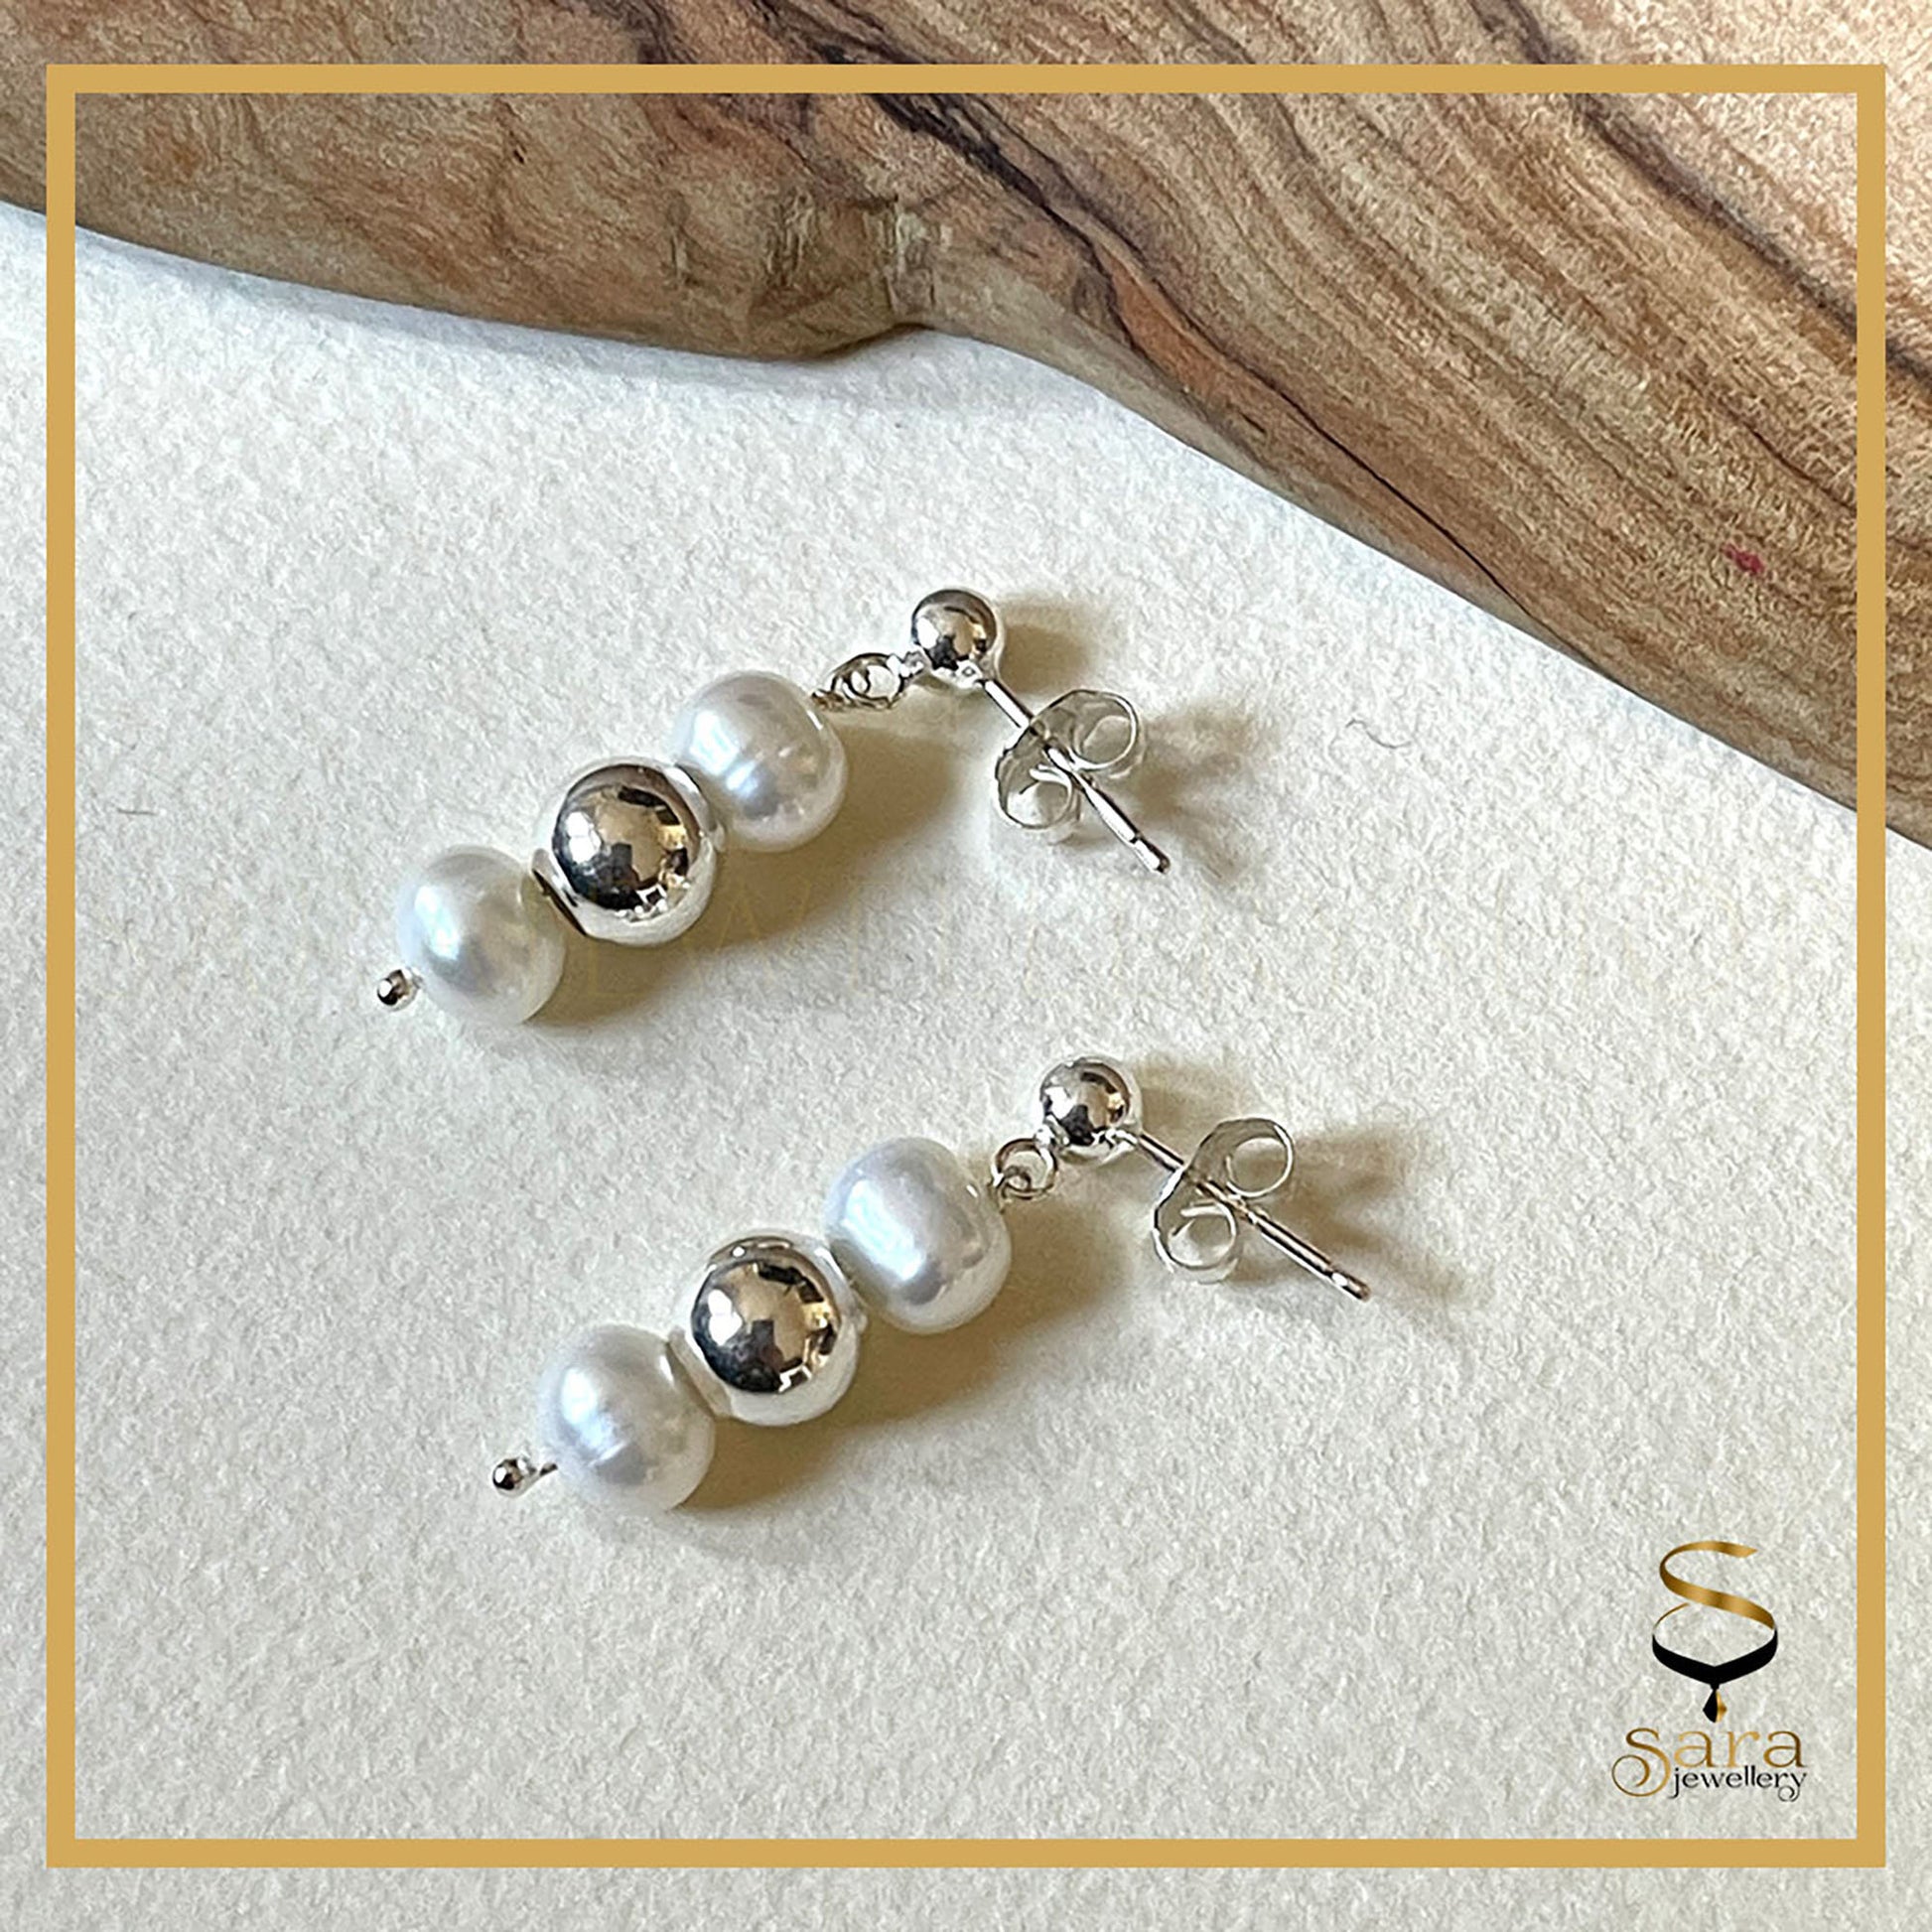 Pearl Drop Earrings | Bridal Earrings | Pearl Earrings | Pearl Jewelry | Bridesmaids Earrings Gift, Gold Earring - sjewellery|sara jewellery shop toronto